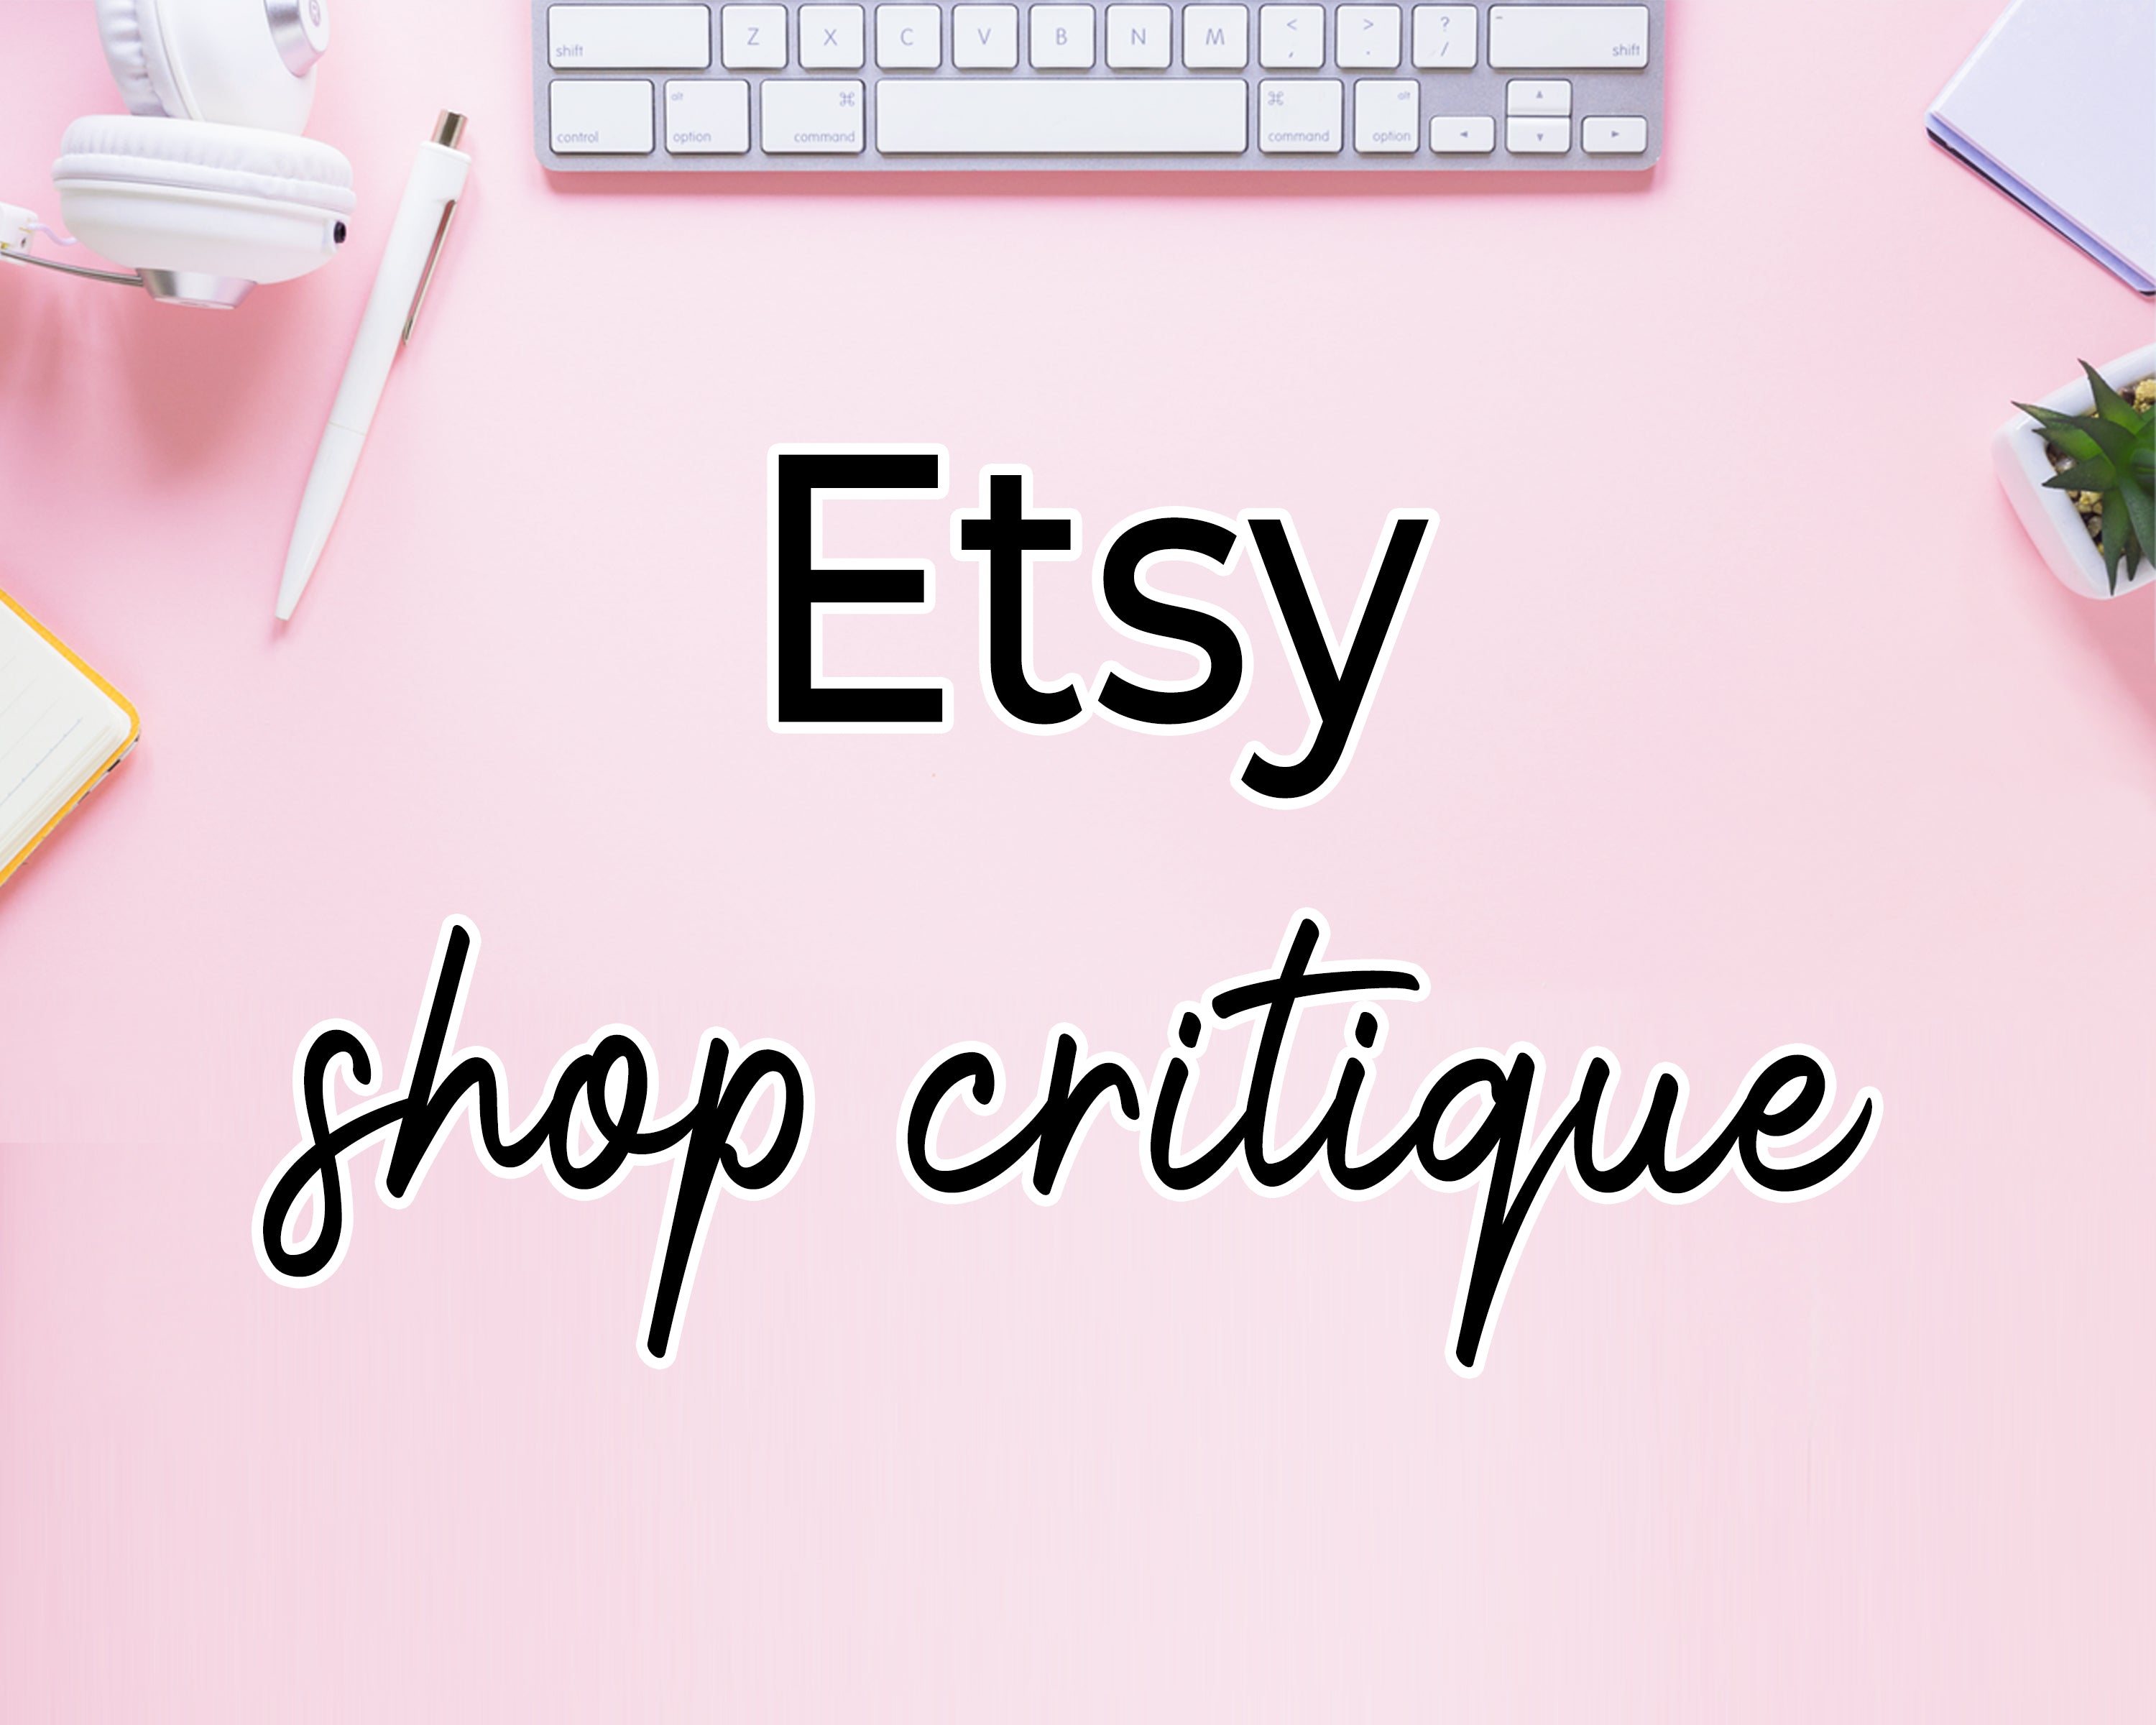 Etsy shop choaching review